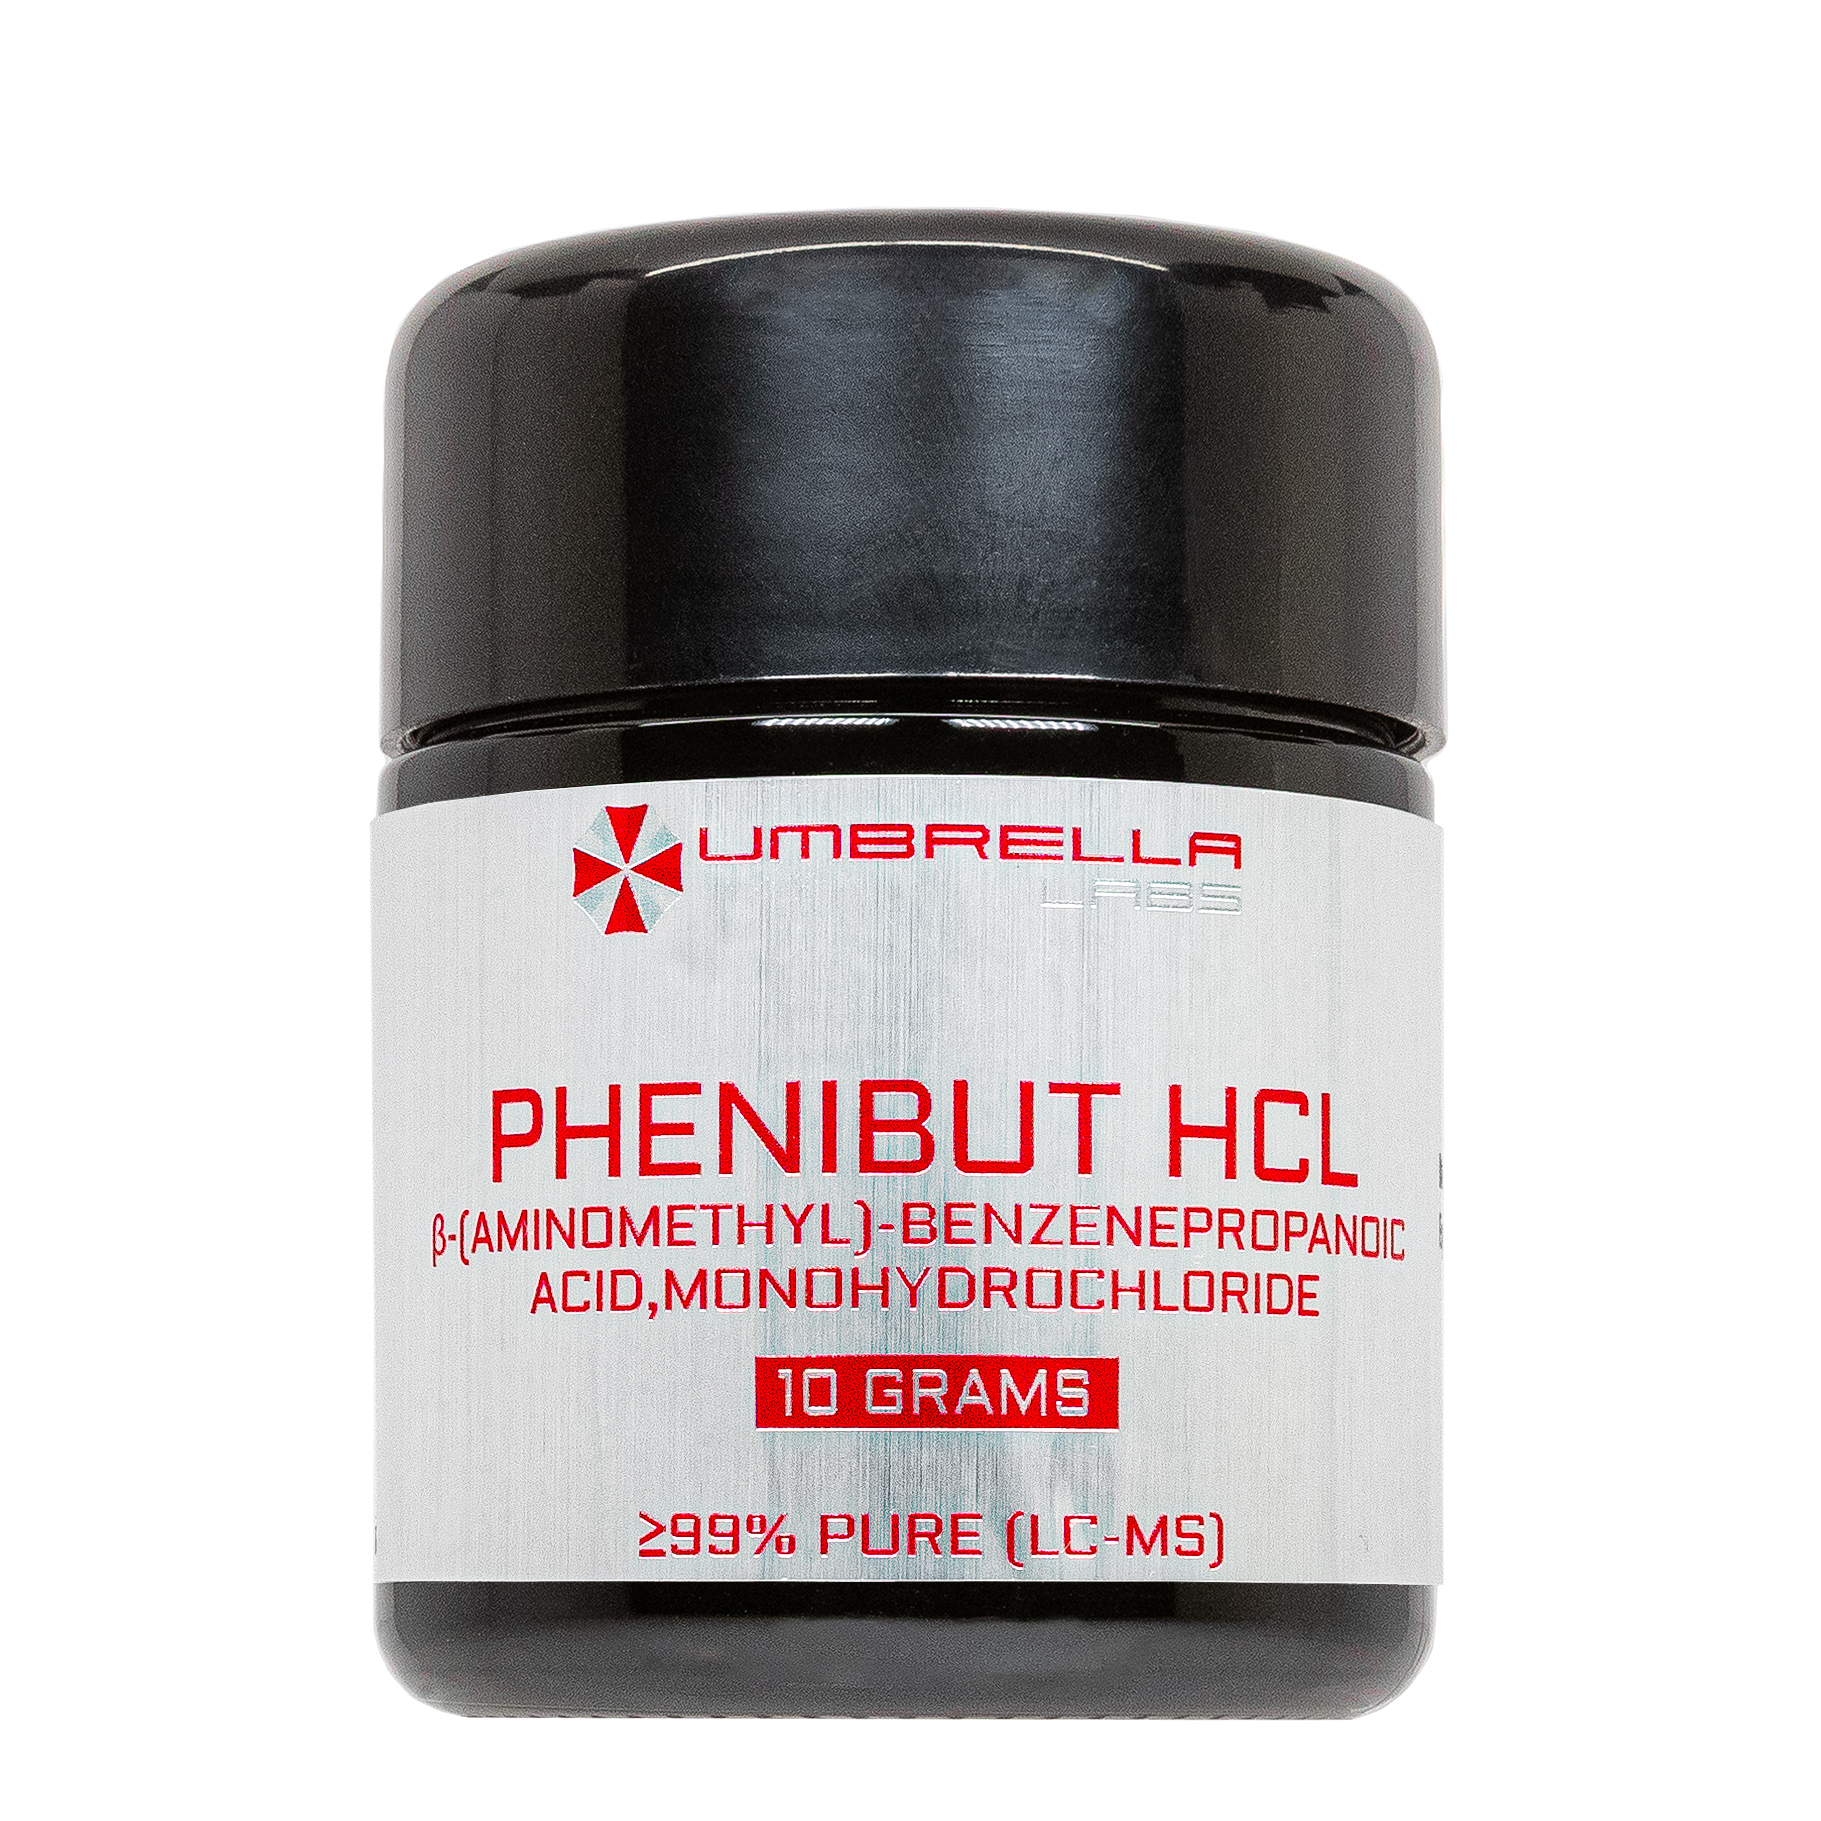 phenibut hcl powder (10 grams)